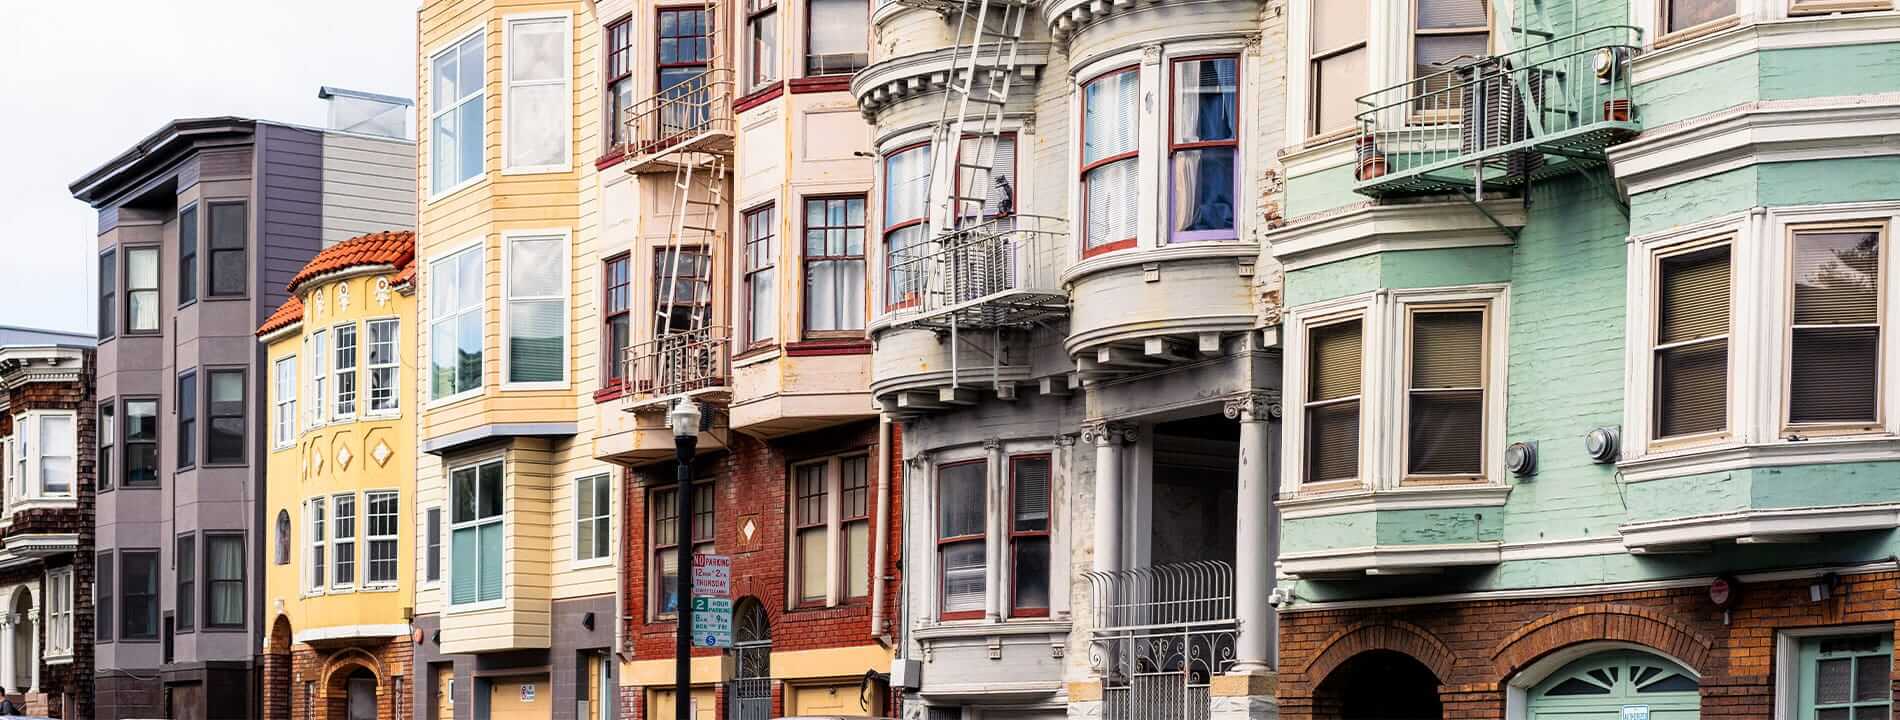 Colorful neighborhood in San Francisco.